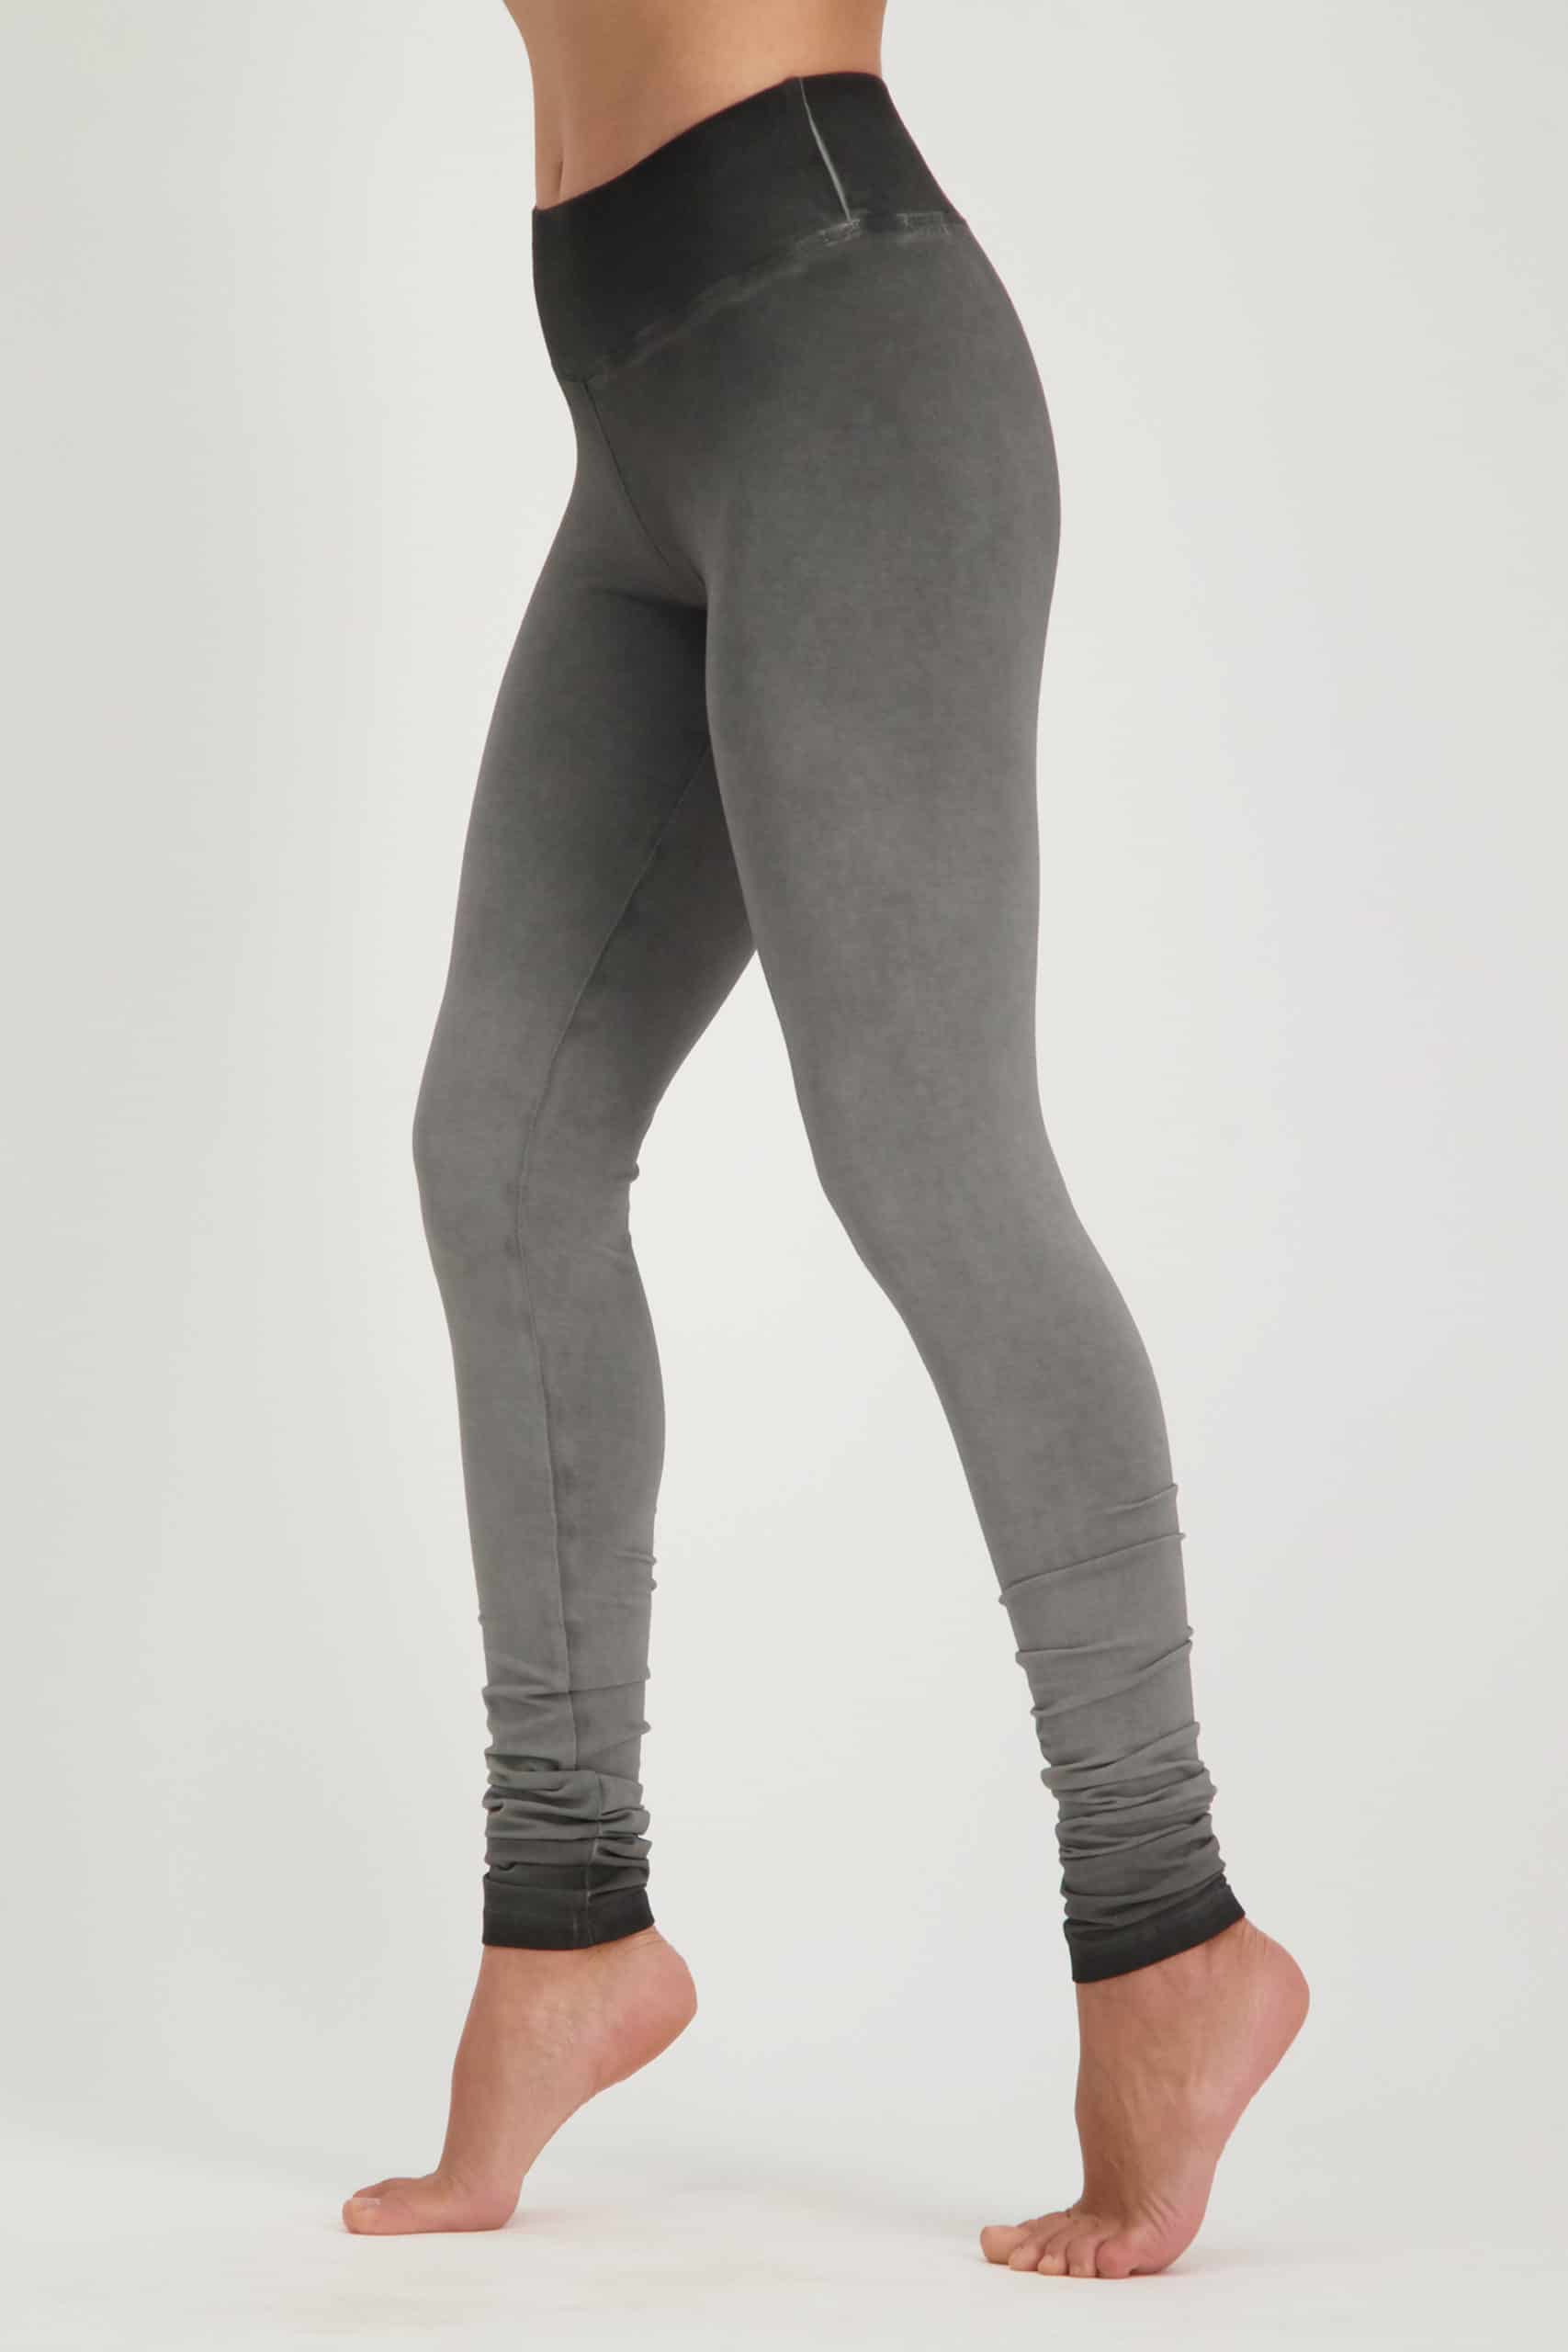 https://www.urban-goddess.com/wp-content/uploads/2022/12/products-bhaktified-legging-off-black_model_side-scaled-1.jpg